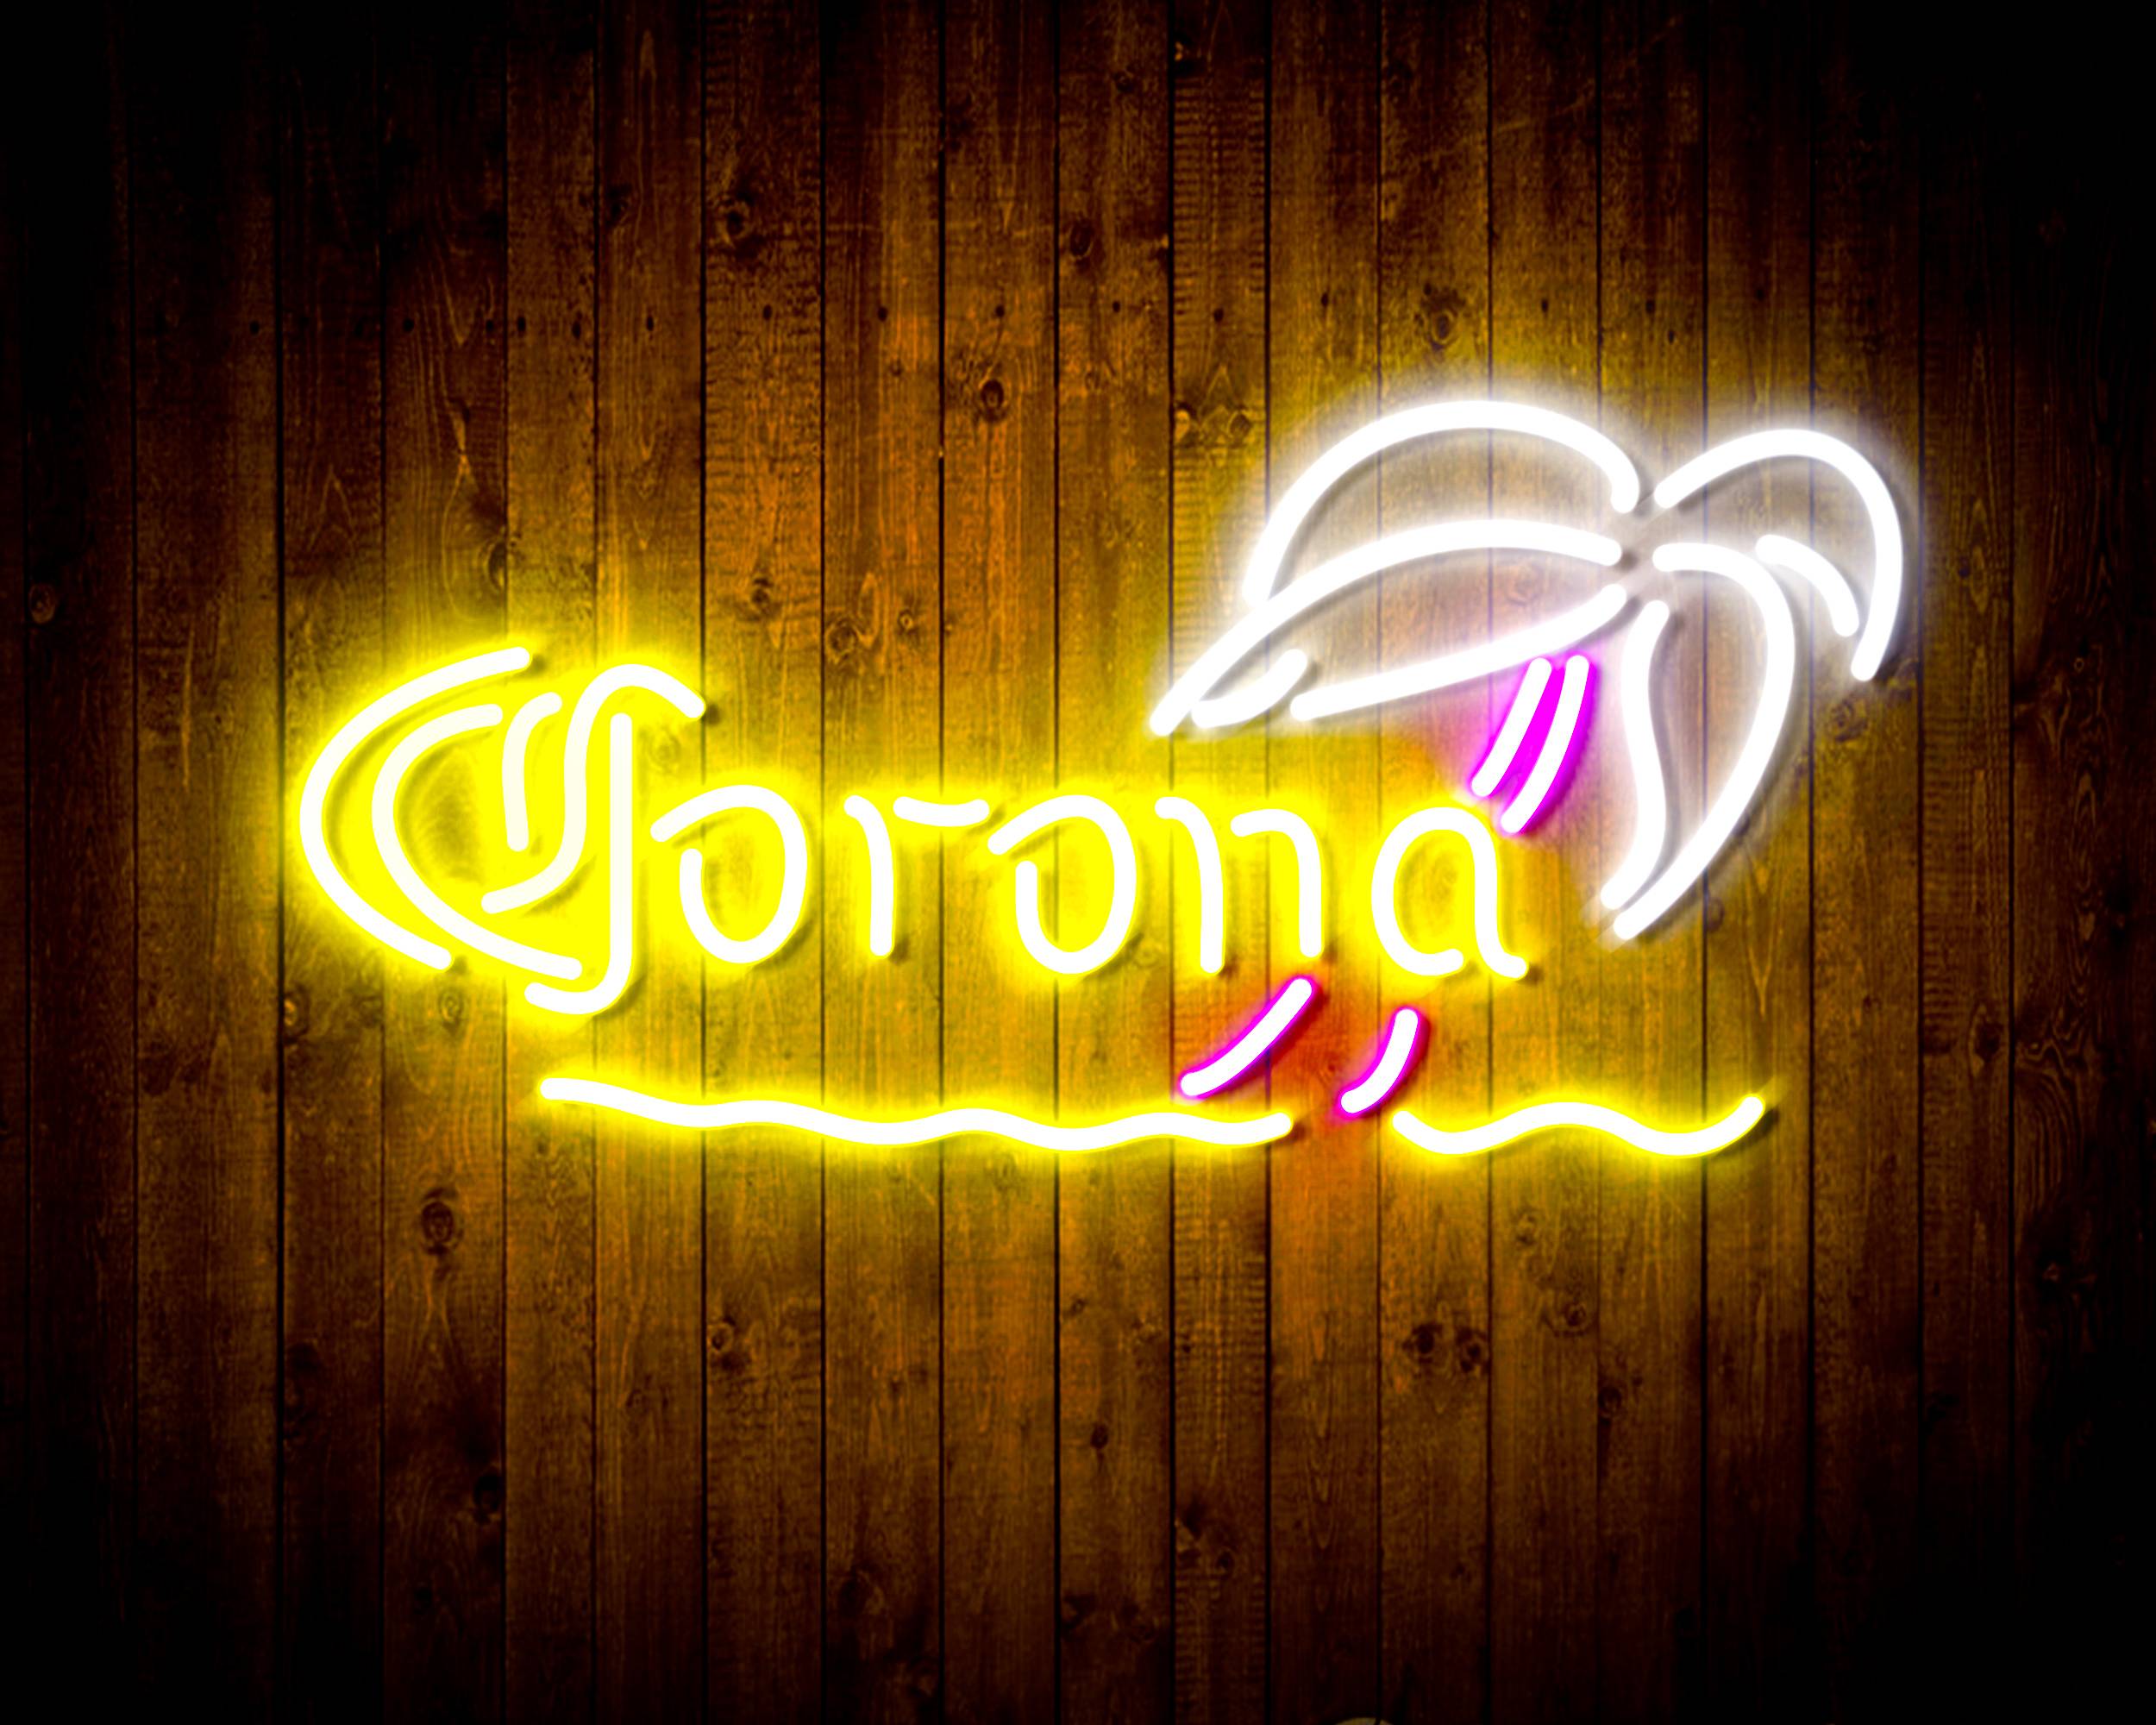 Corona with Palm Tree Handmade LED Neon Light Sign